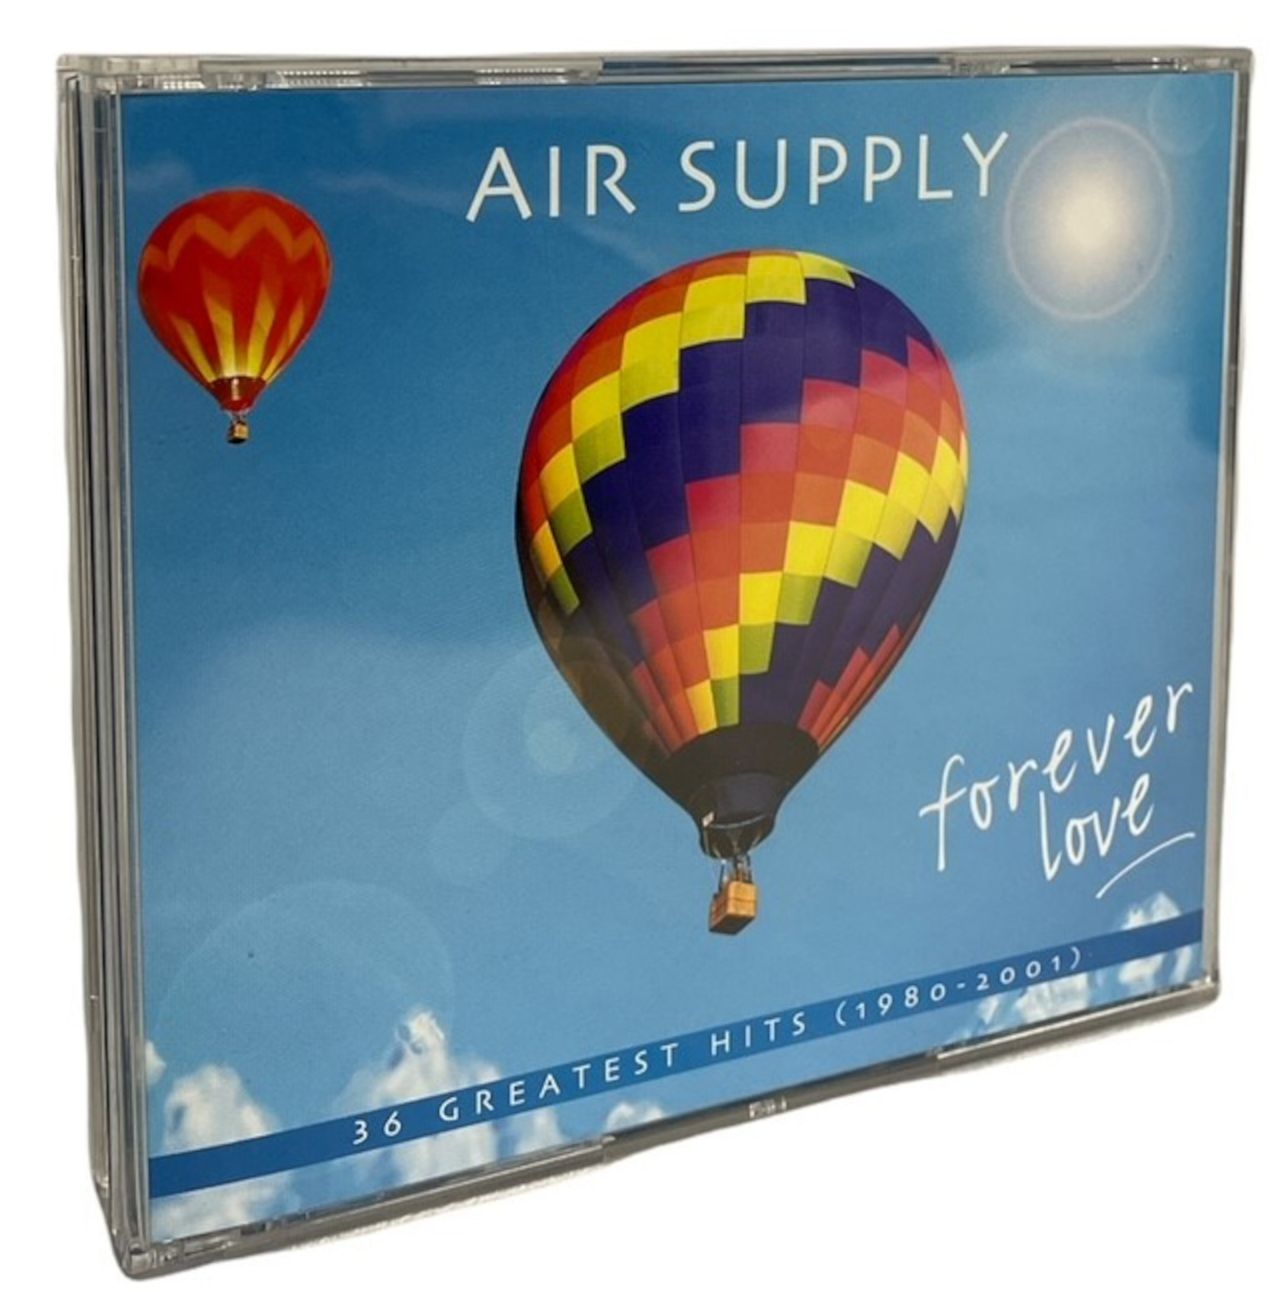 Air Supply Forever Love: Greatest Hits Hong Kong 2 CD album set (Double CD) AIS2CFO786199